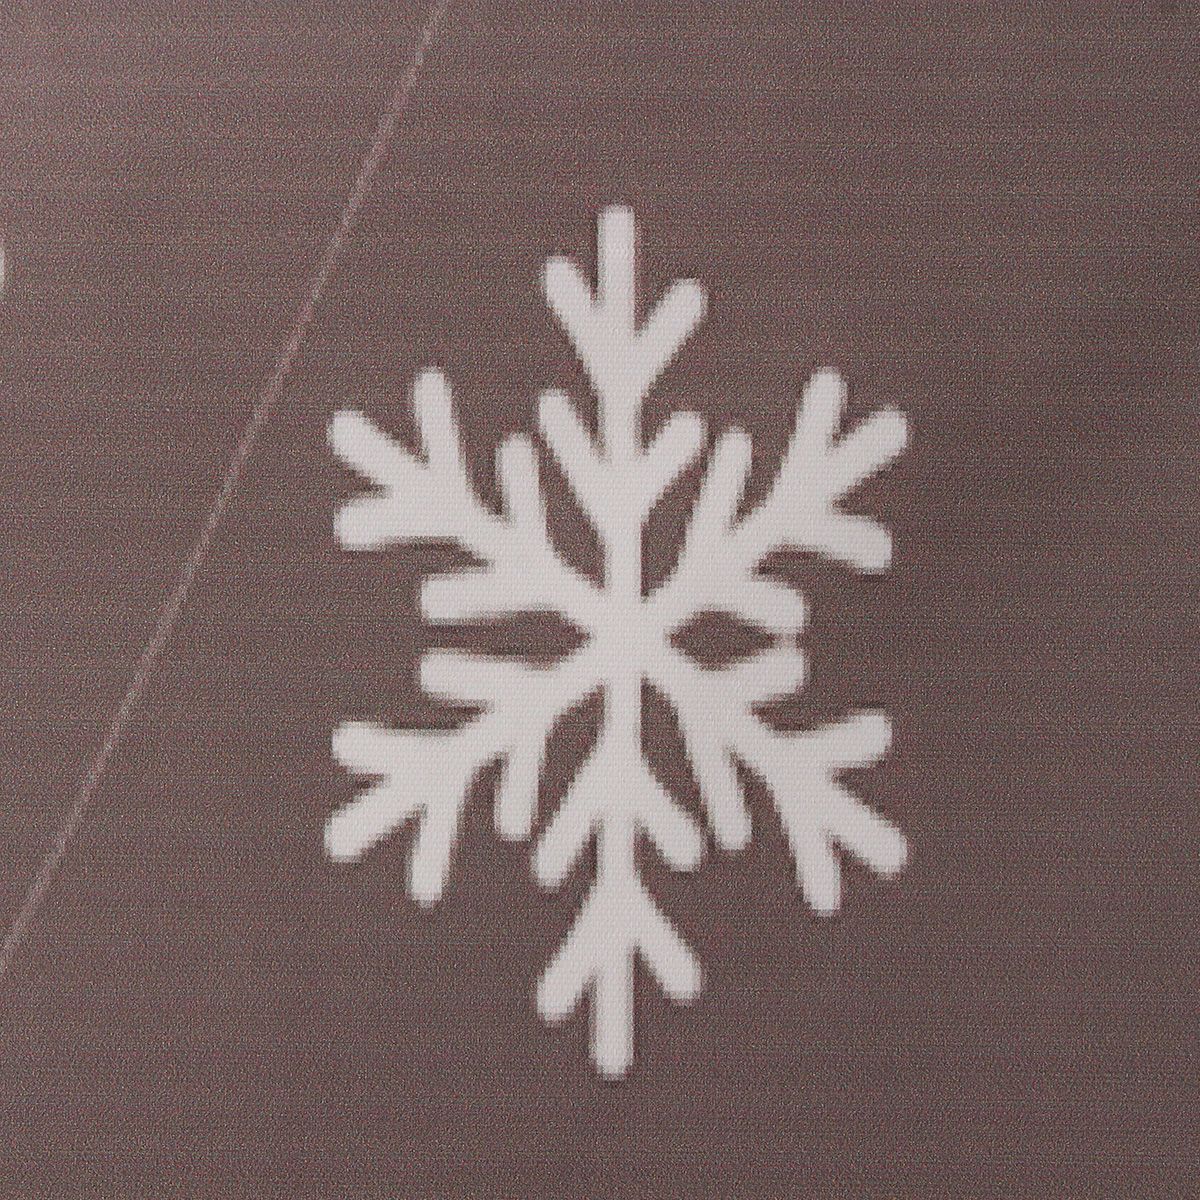 10x10FT-Vinyl-Winter-Snow-Flower-Photography-Backdrop-Background-Studio-Prop-1388233